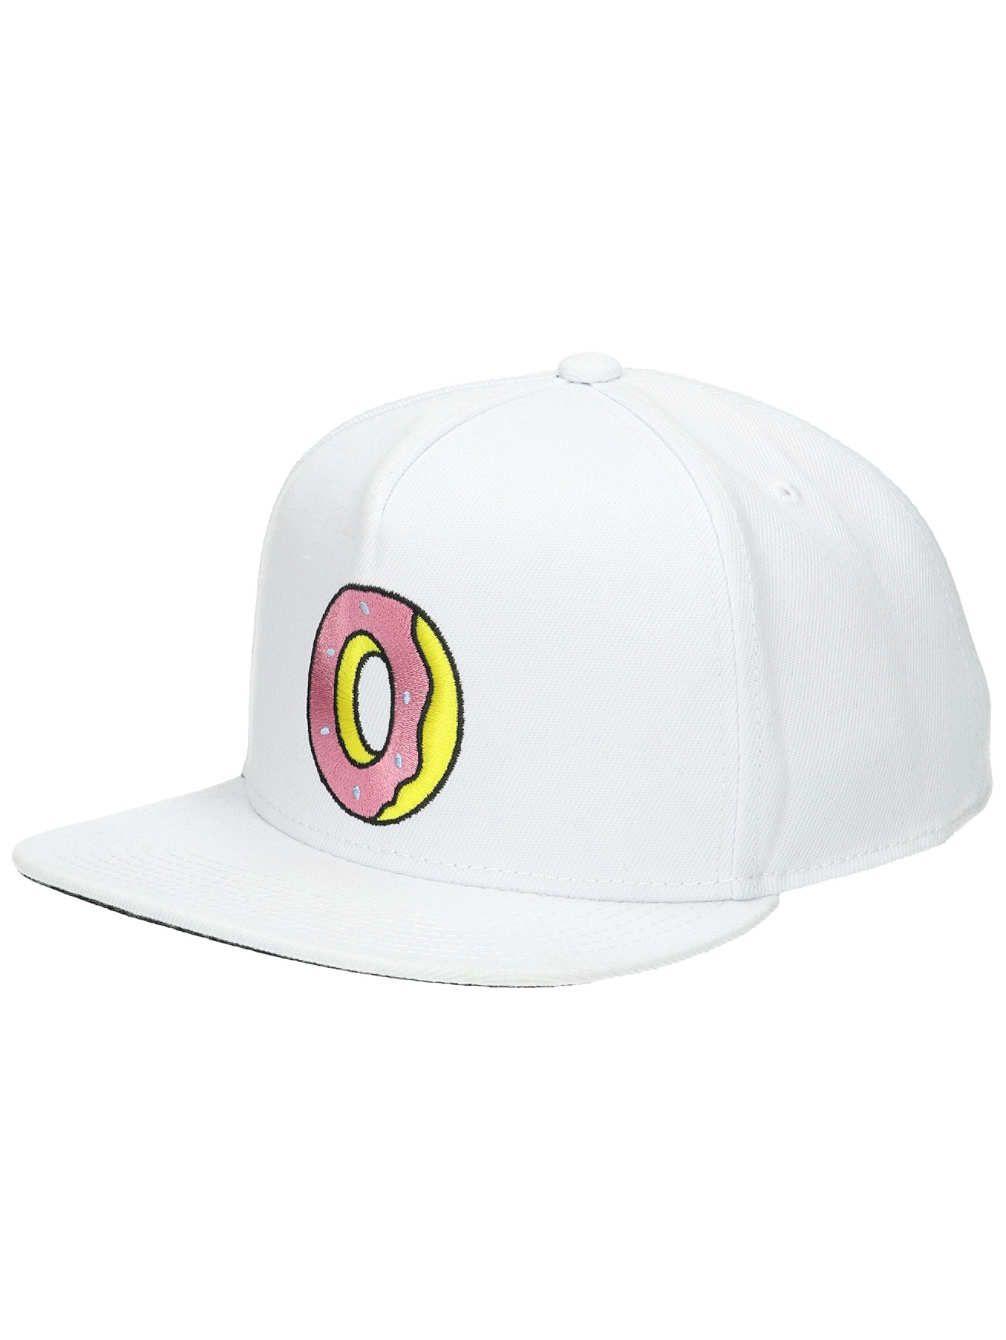 Odd Future Single Donut Logo - Buy Odd Future Single Donut Snapback Cap online at blue-tomato.com